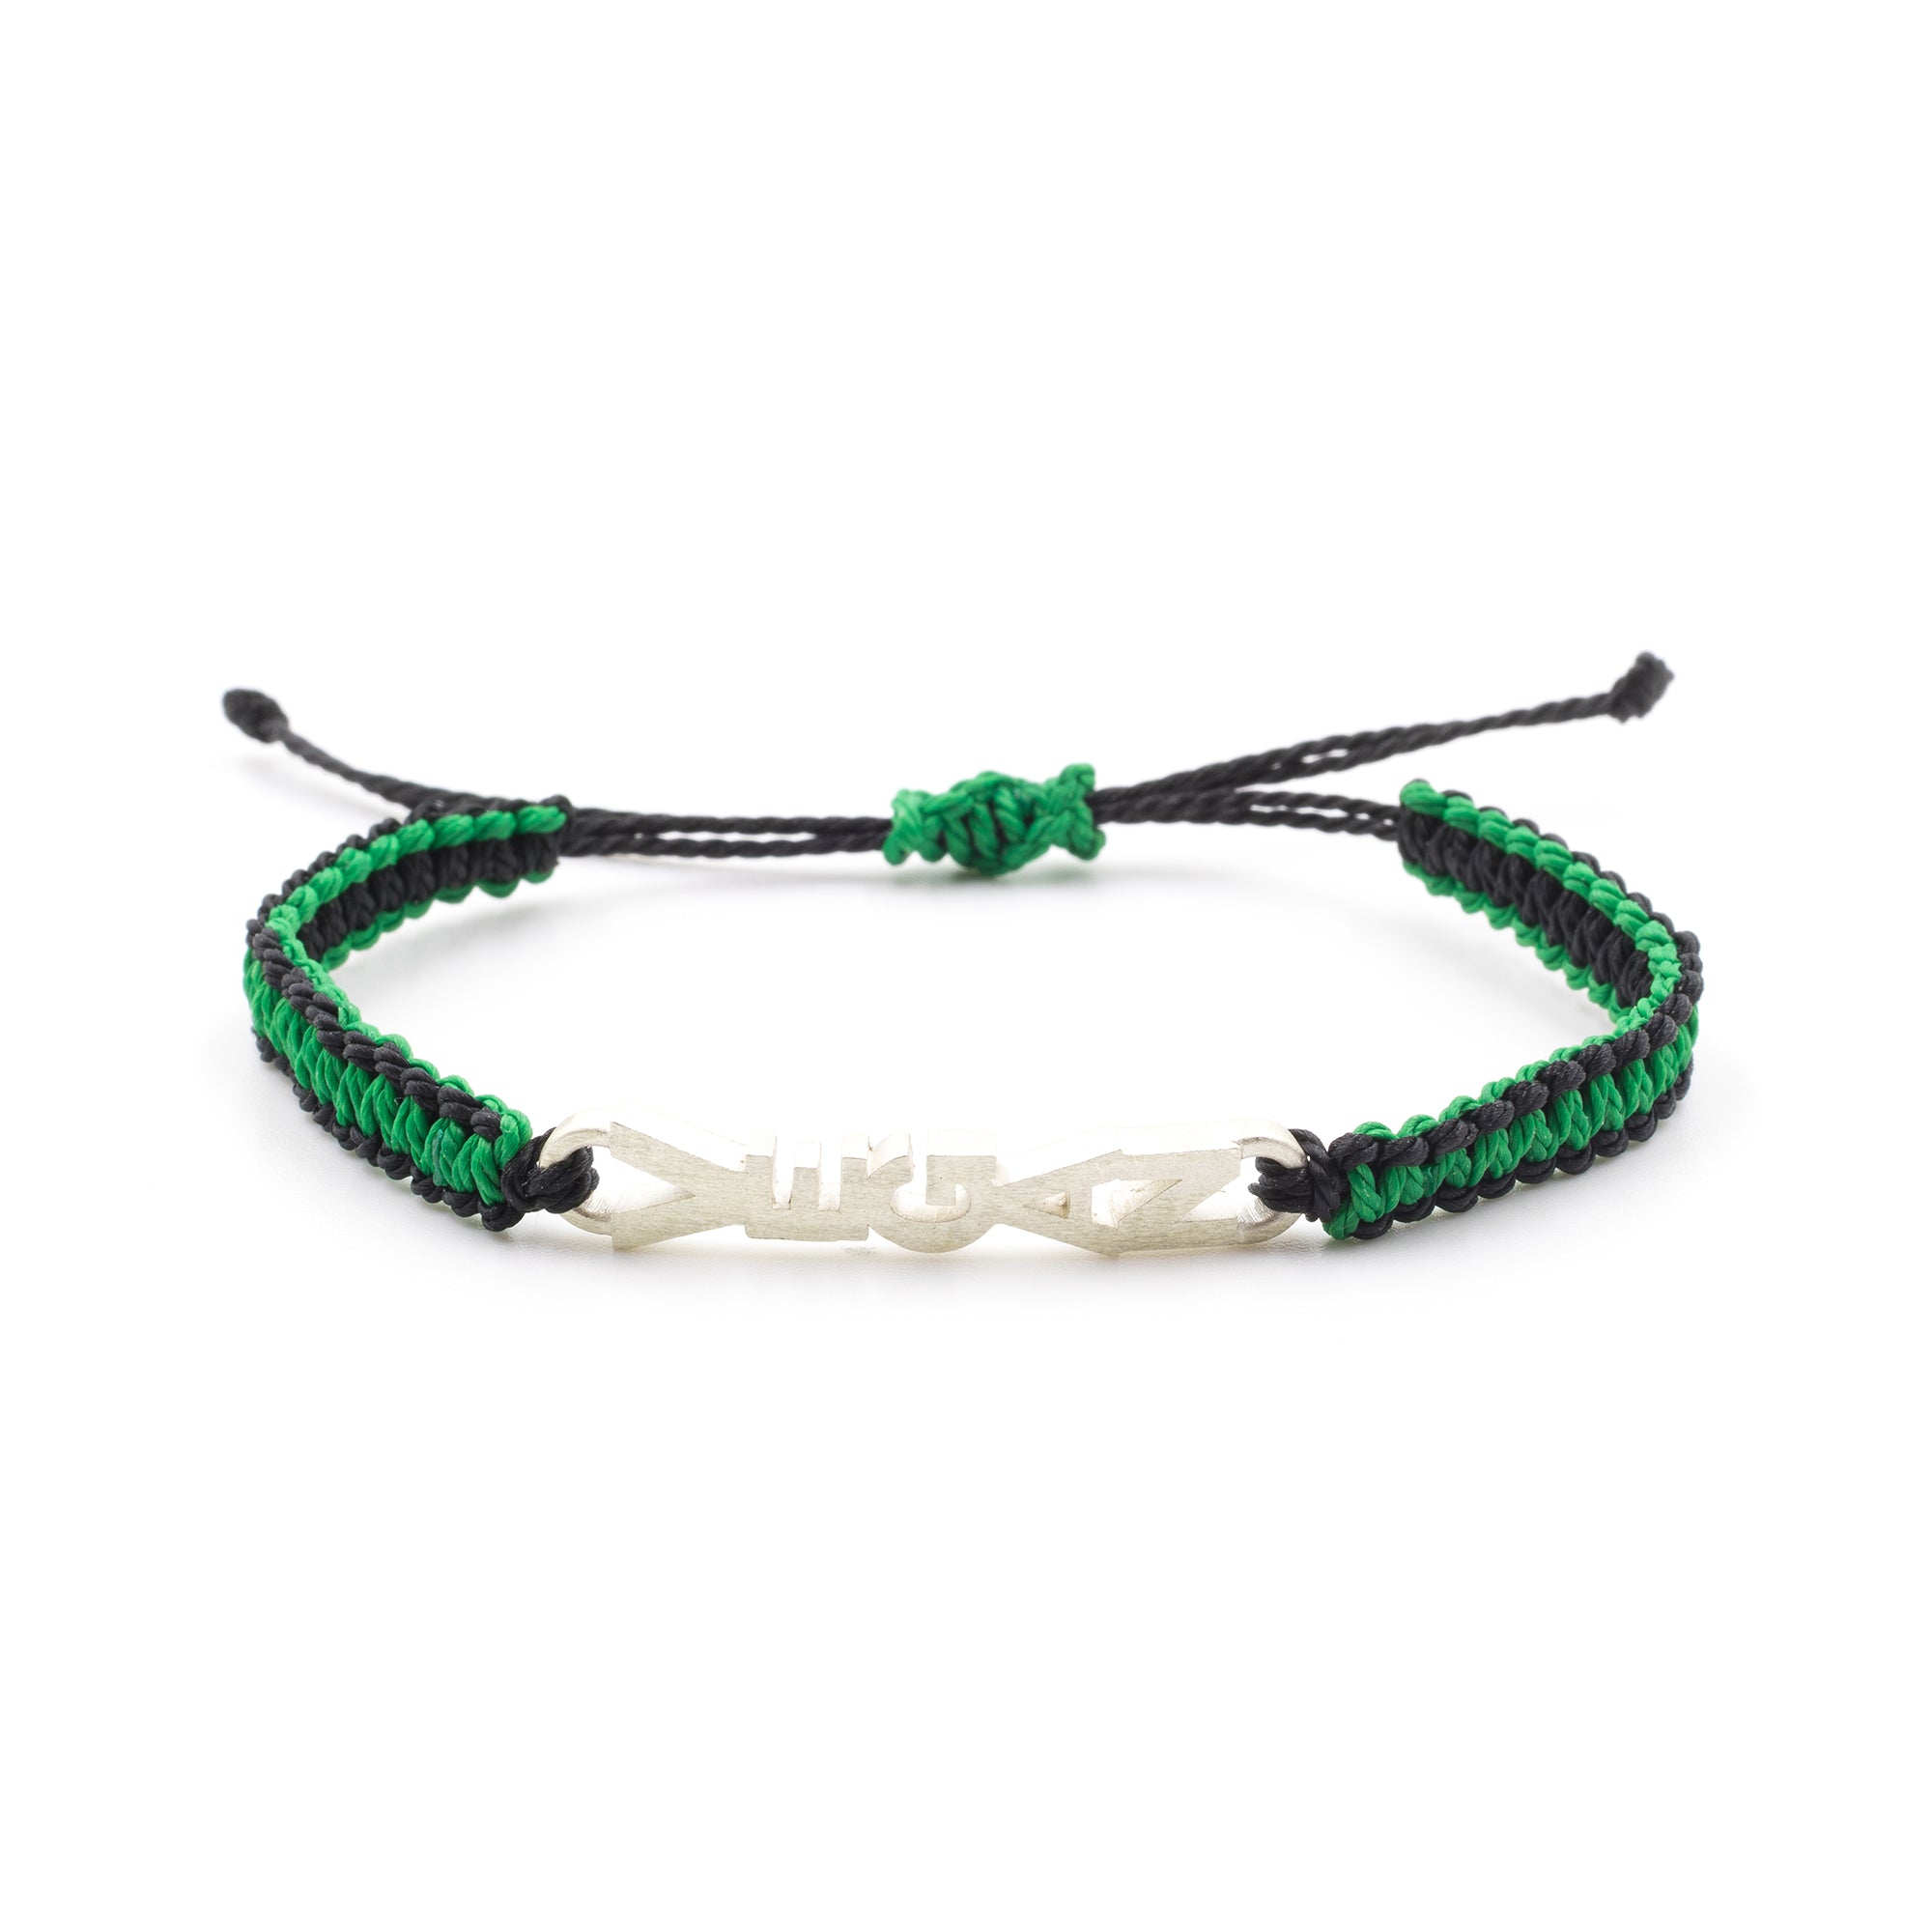 Vegan bracelet green, black